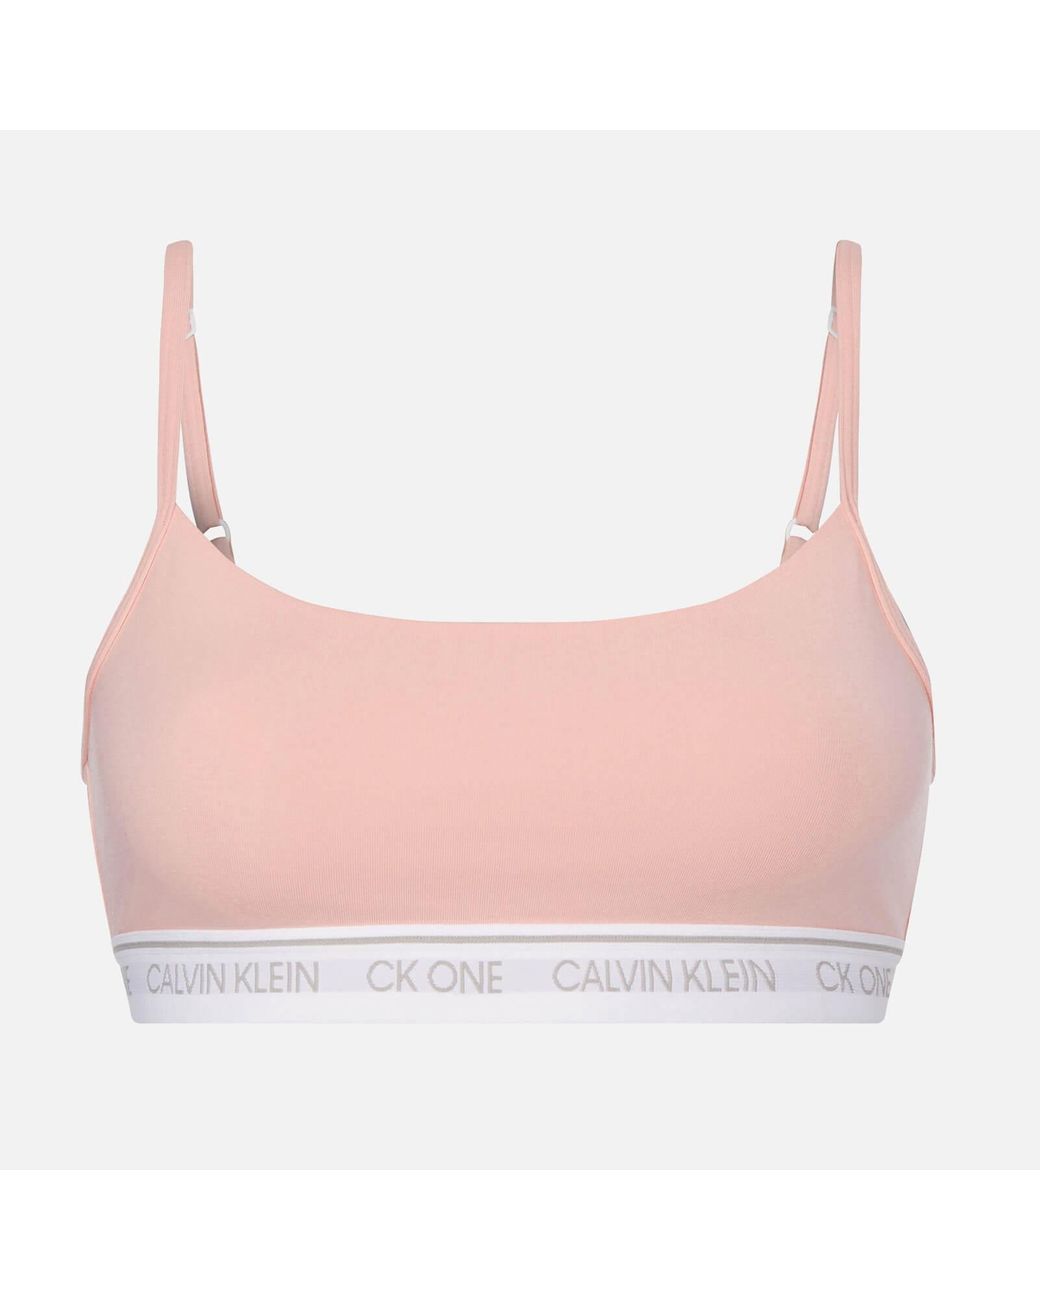 Calvin Klein Ck One Unlined Bralette in Pink | Lyst